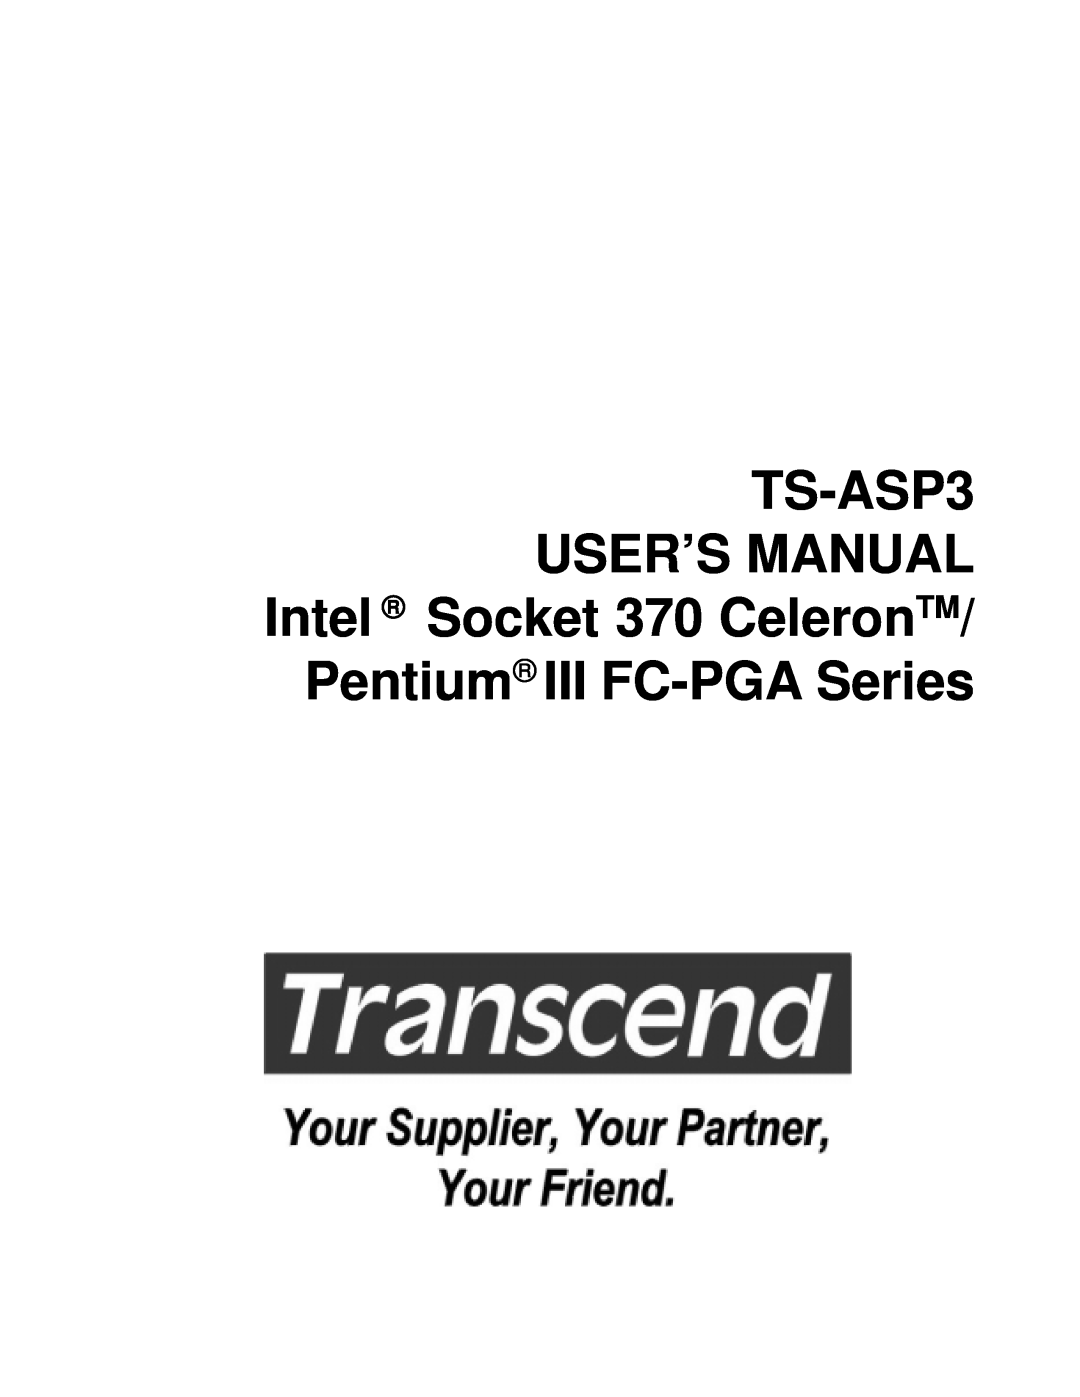 Intel user manual TS-ASP3 USER’S MANUAL Intel Socket 370 CeleronTM, Pentium III FC-PGASeries 